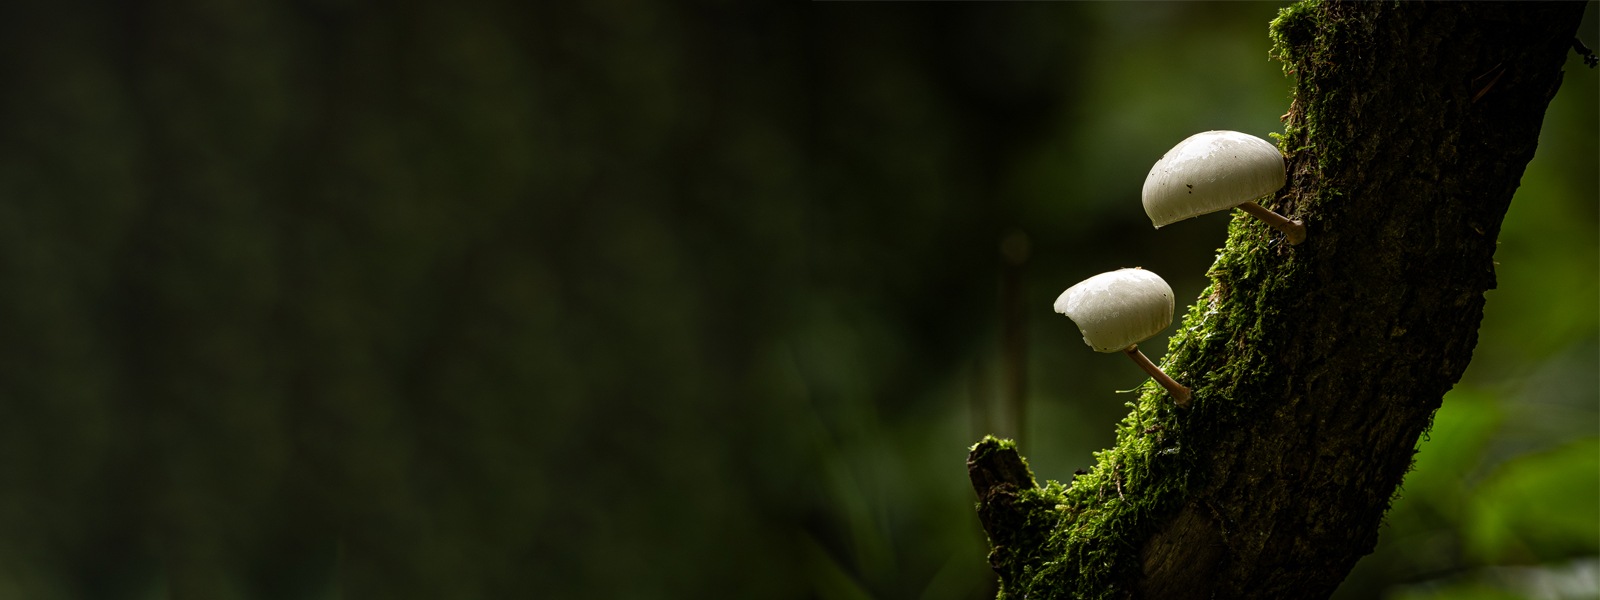 Two white mushrooms on a mossy tree branch, taken by Microsoft employee, Finnian Power.